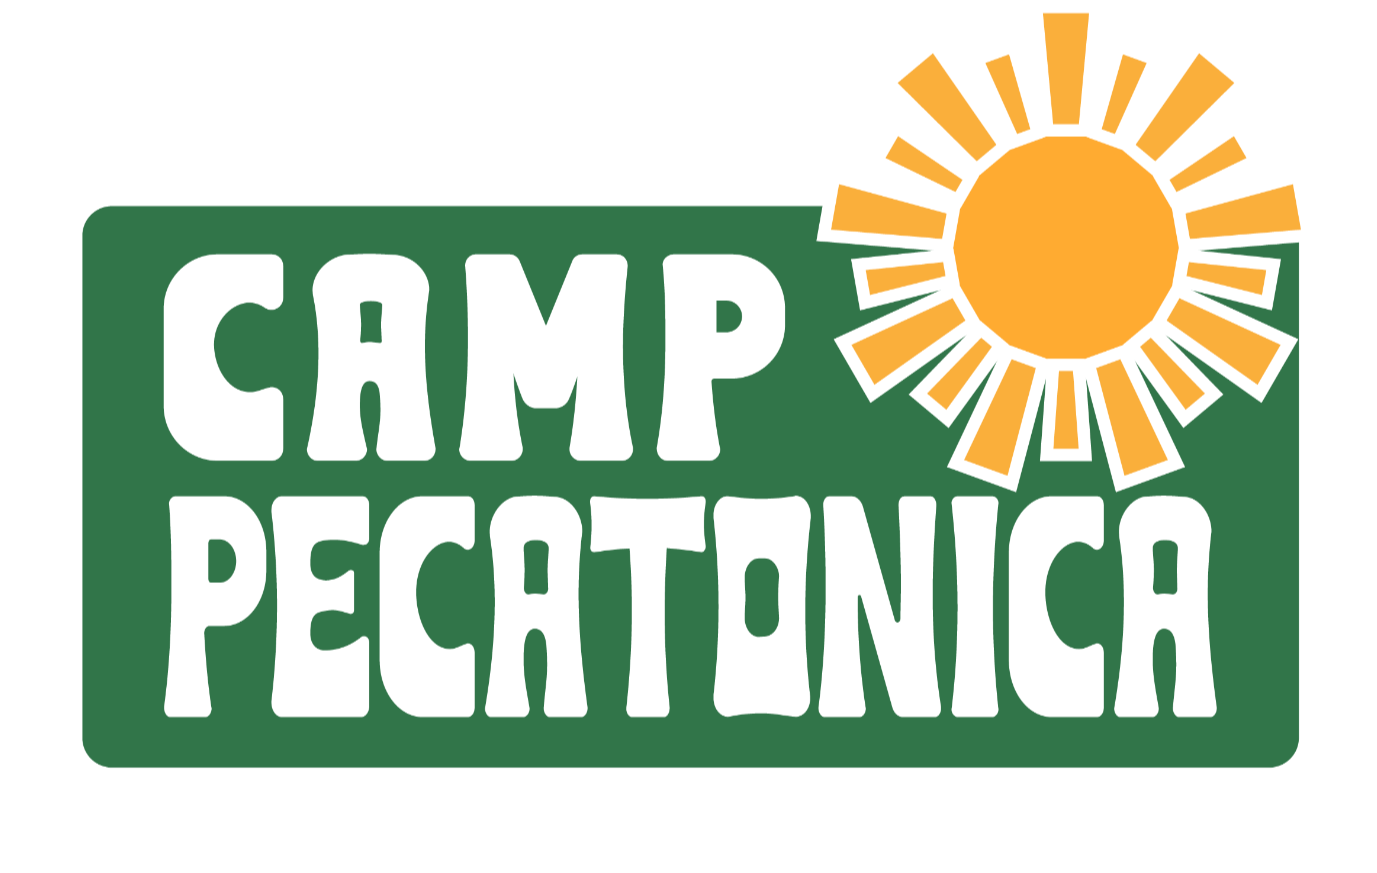 Camp Pecatonica